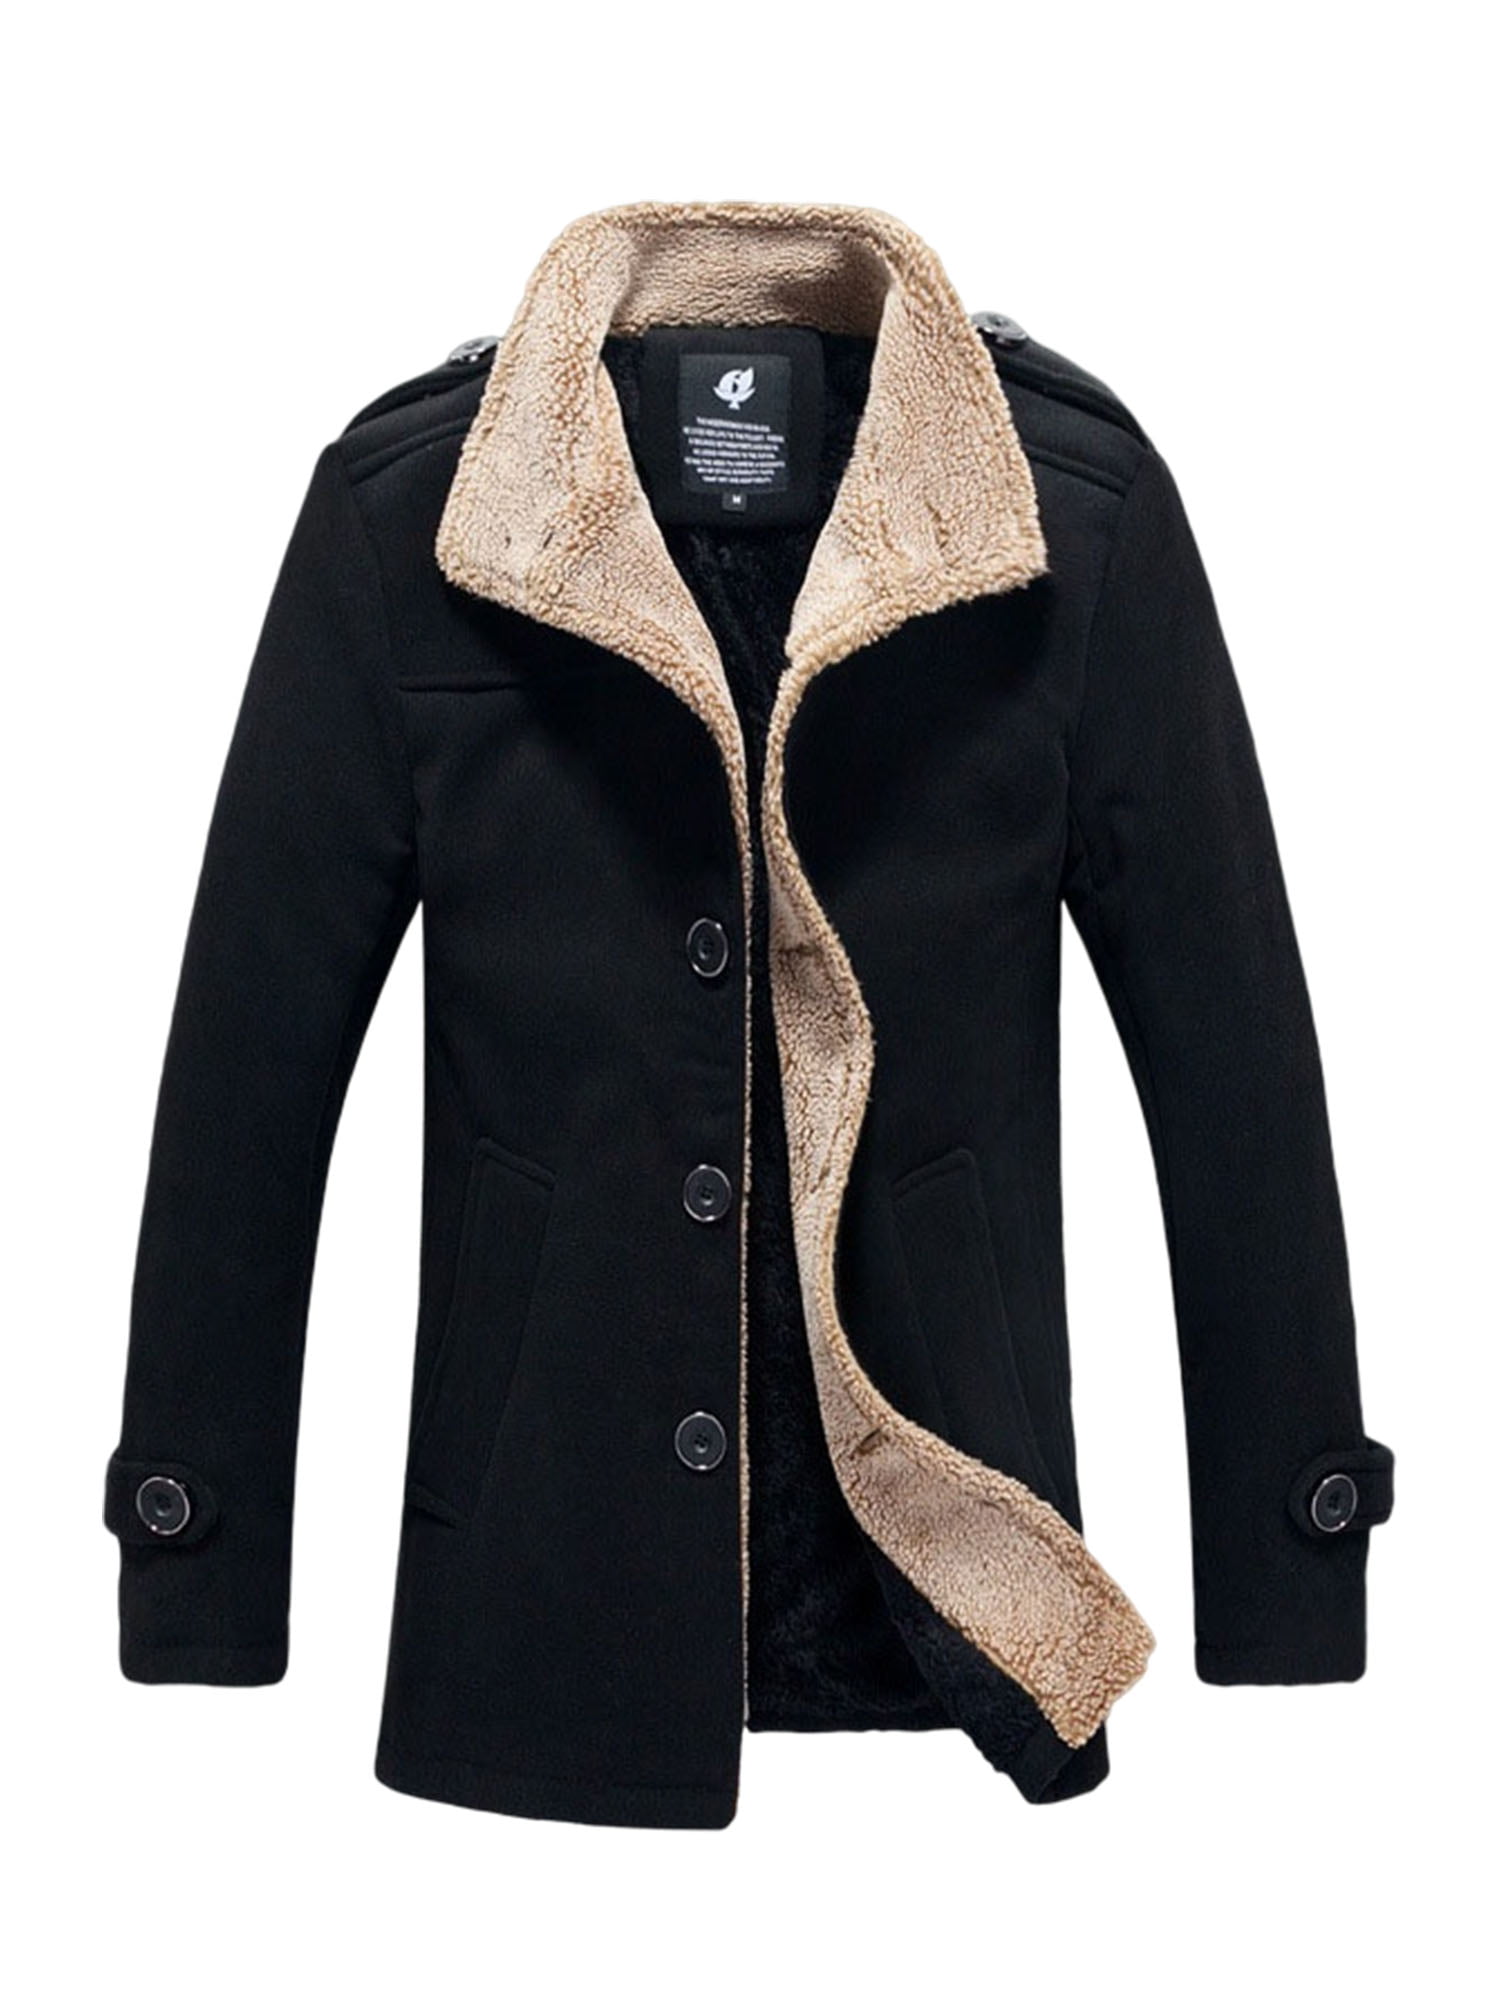 Buy Frontwalk Mens Pea Coat Wool Blend Jacket Winter Single Breasted ...